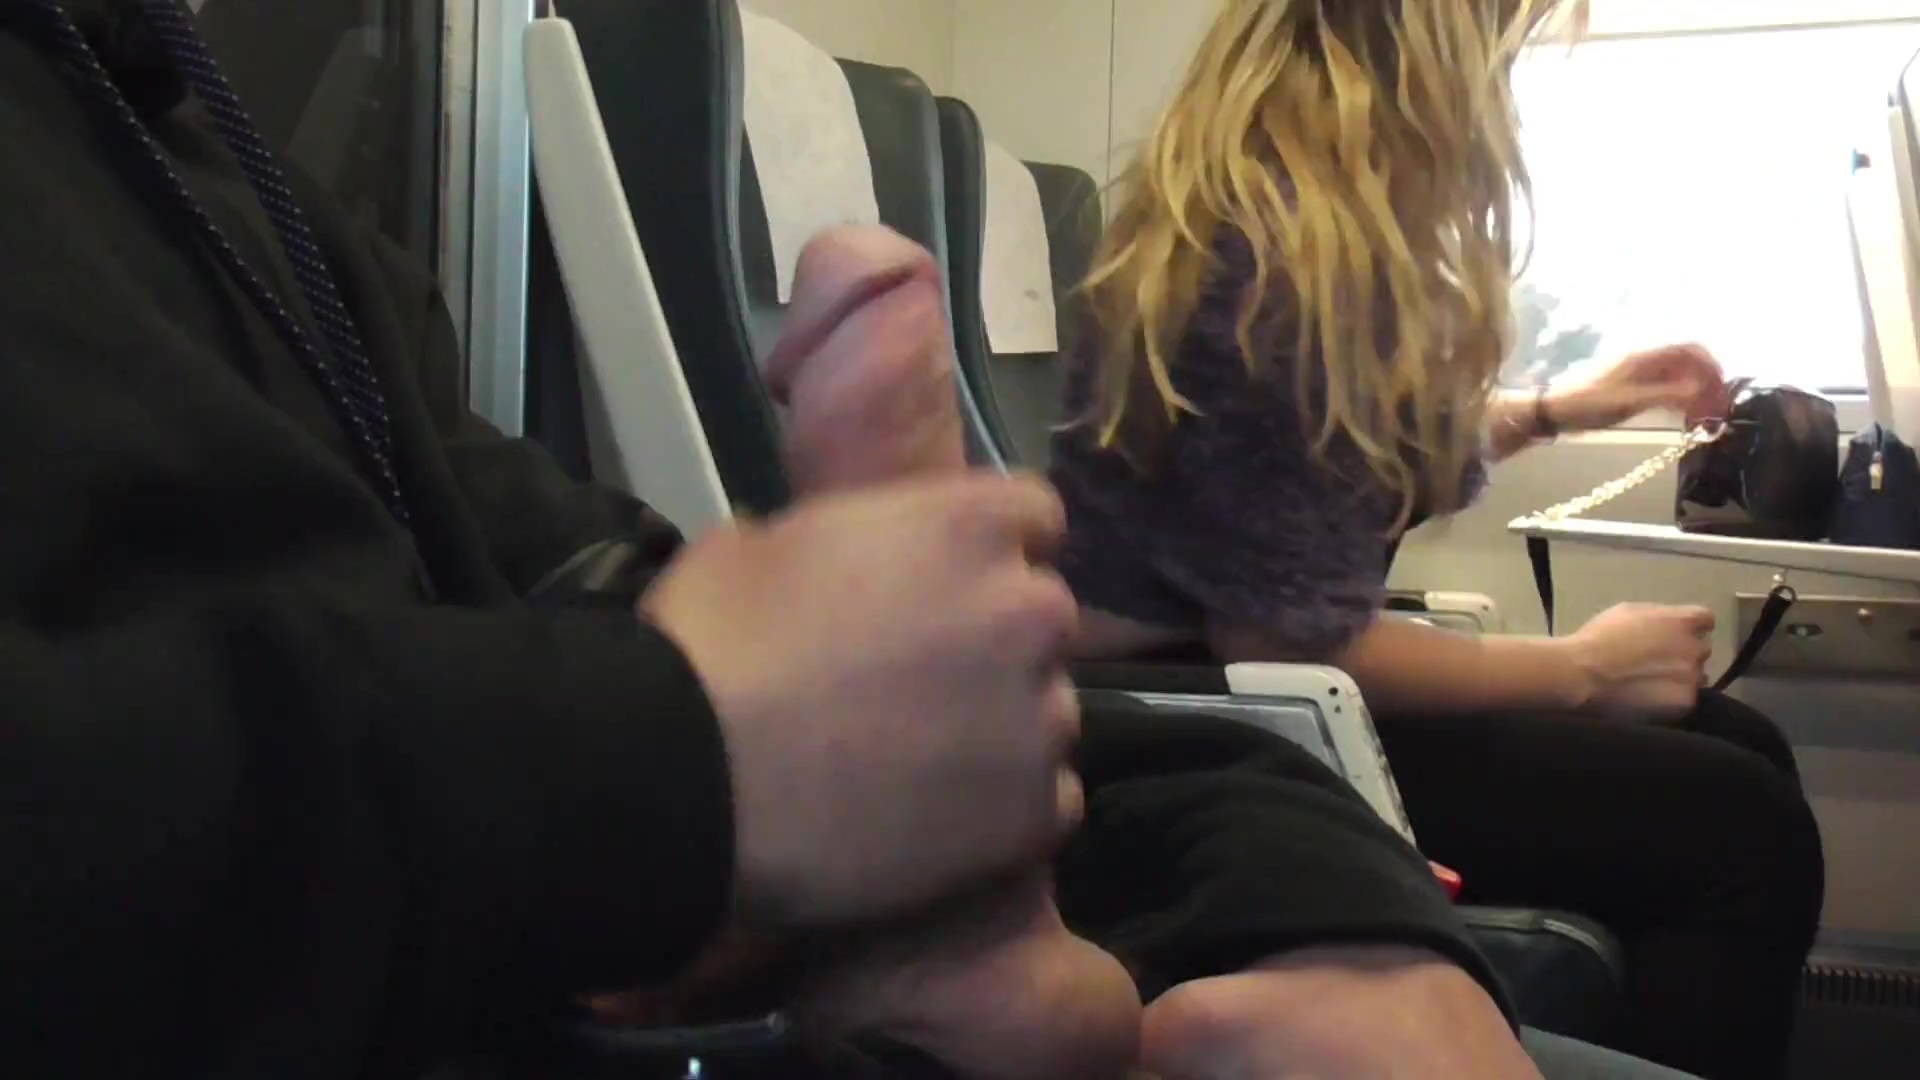 Curly Blonde Girl Sucks Strangers Dick In The Train Video 